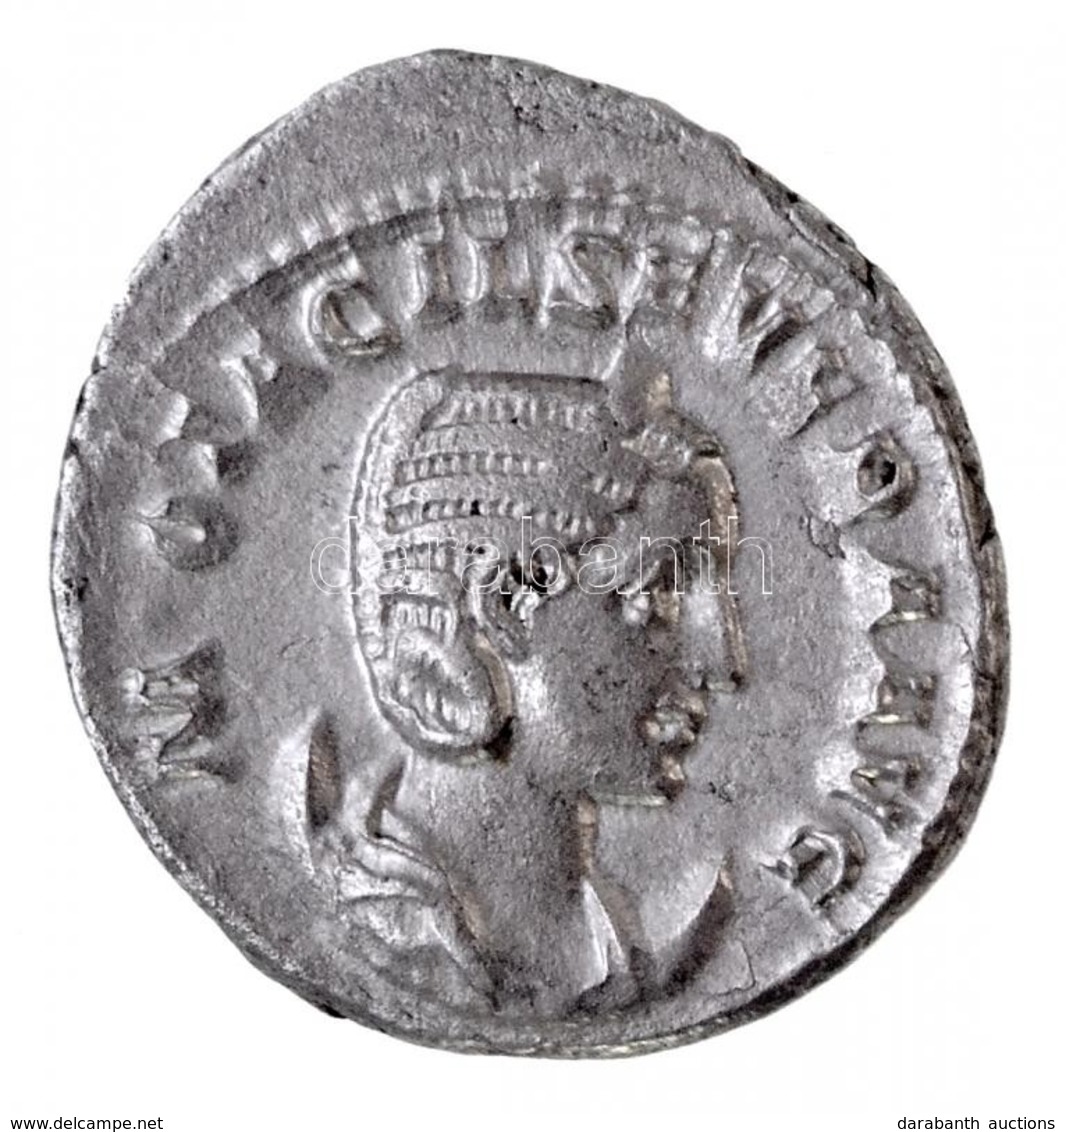 Római Birodalom / Róma / Otacilia Severa 244-249. Antoninianus Ag (4,55g) T:2- Roman Empire / Rome / Otacilia Severa 244 - Ohne Zuordnung